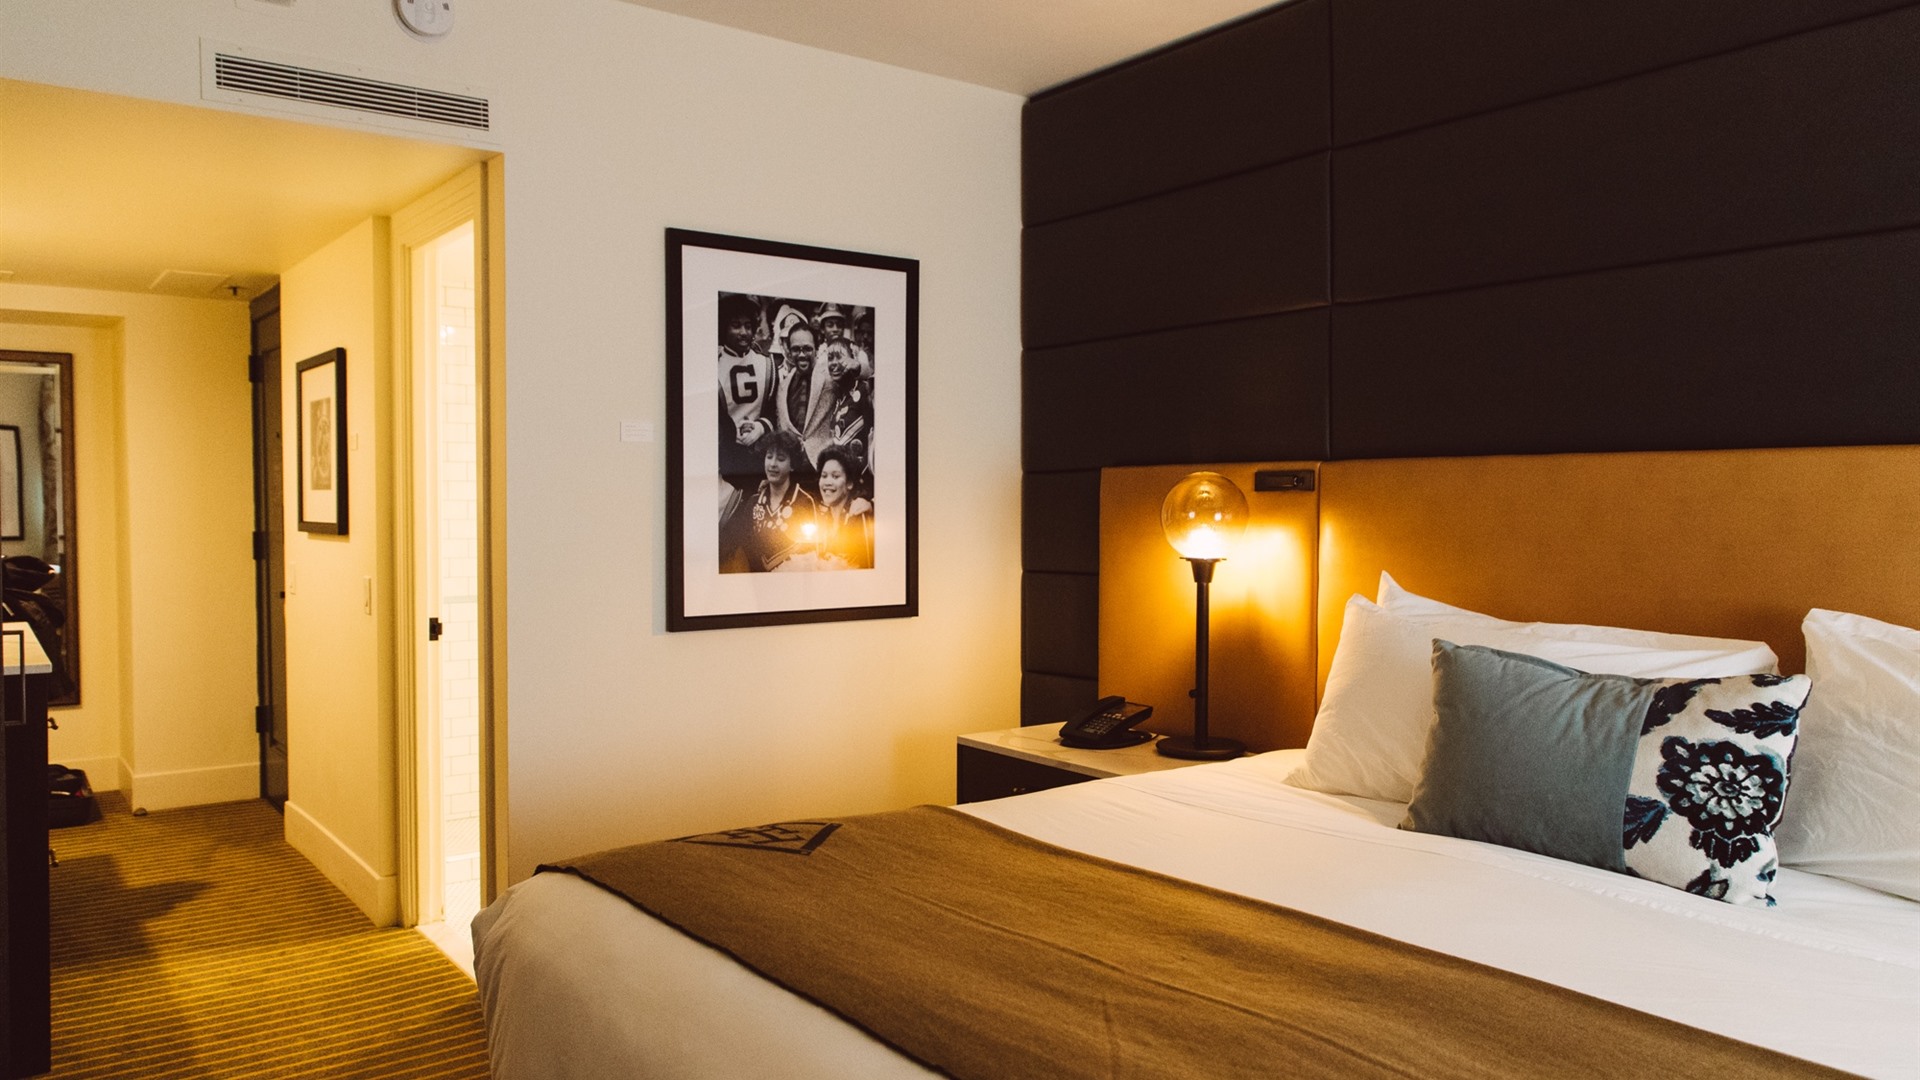 Hotel Bed Room Image Hd - HD Wallpaper 